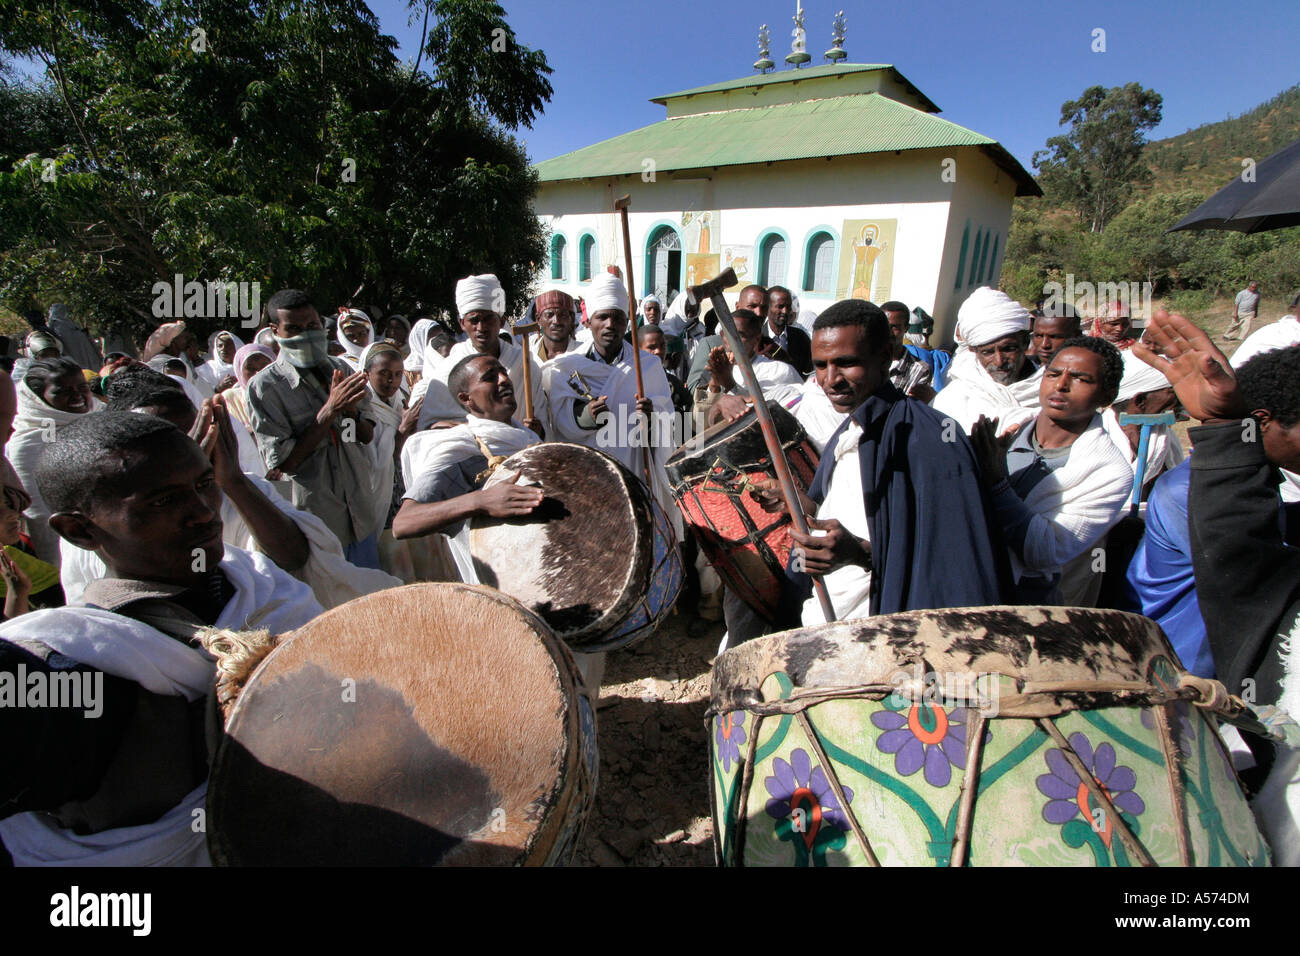 Painet jb1236 ethiopia musicians kidana merhet church tigray africa religion christianity orthodox festival music dance Stock Photo